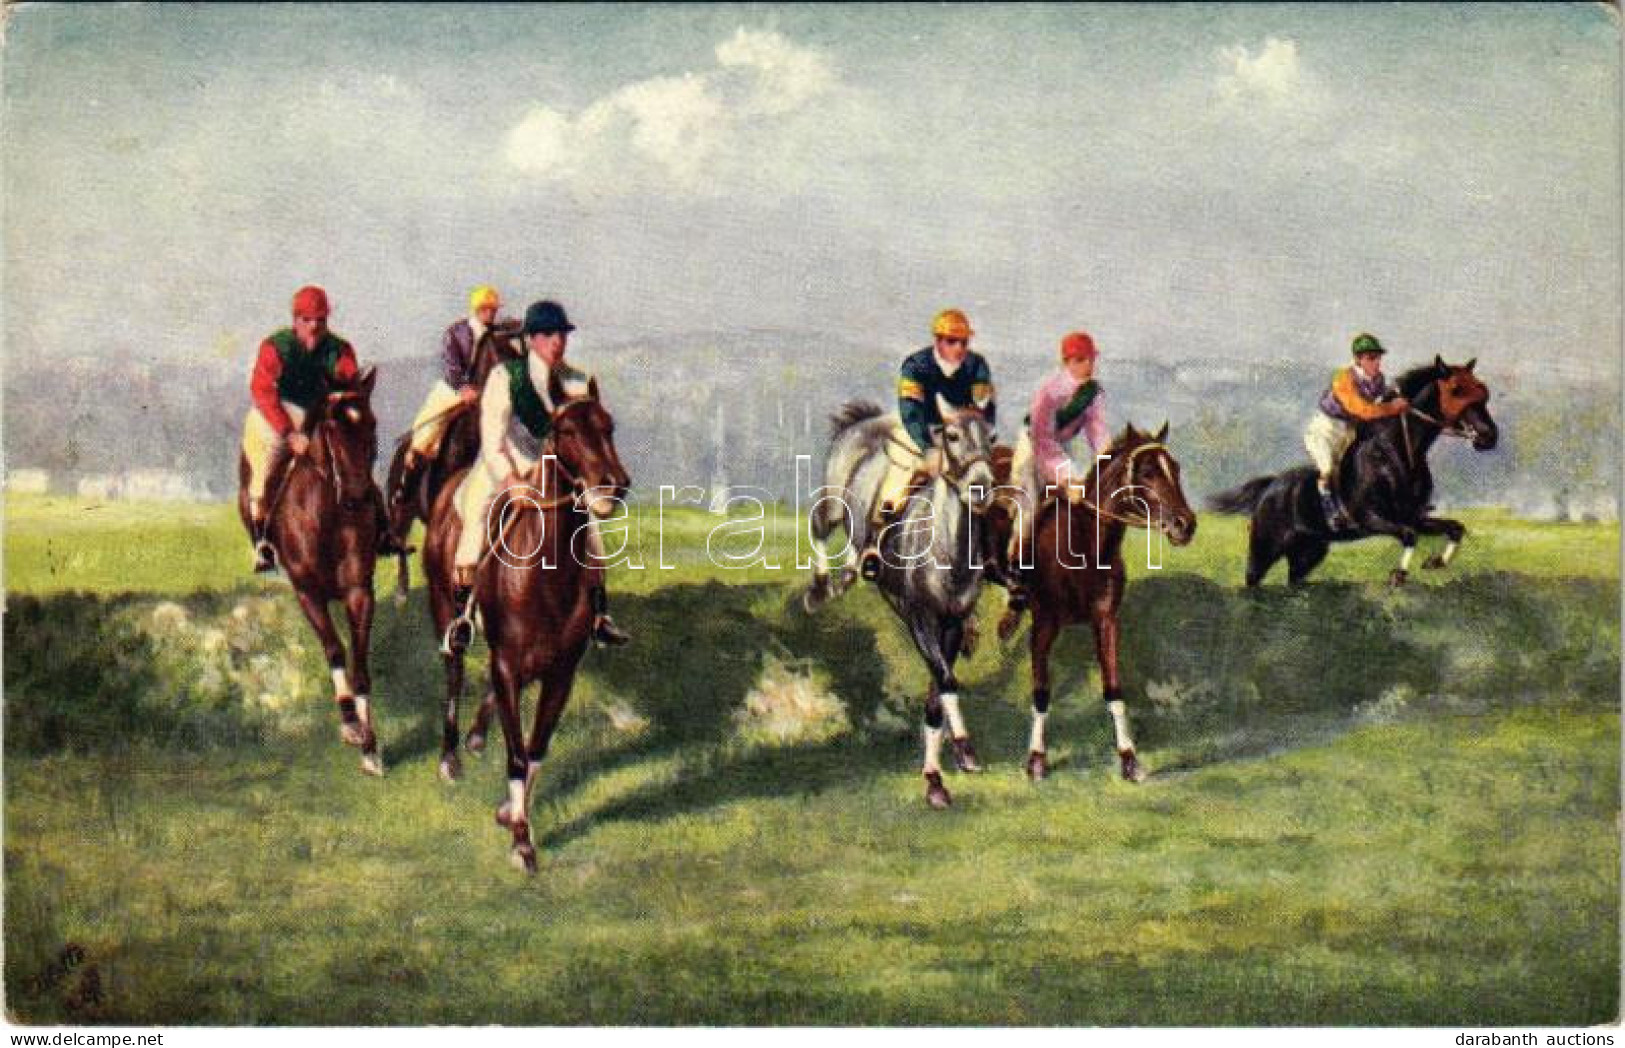 T2/T3 1912 "Steeplechasing" Series III. Keeping Together. Raphael Tuck & Sons "Oilette" Postcard 9522. (EK) - Non Classés